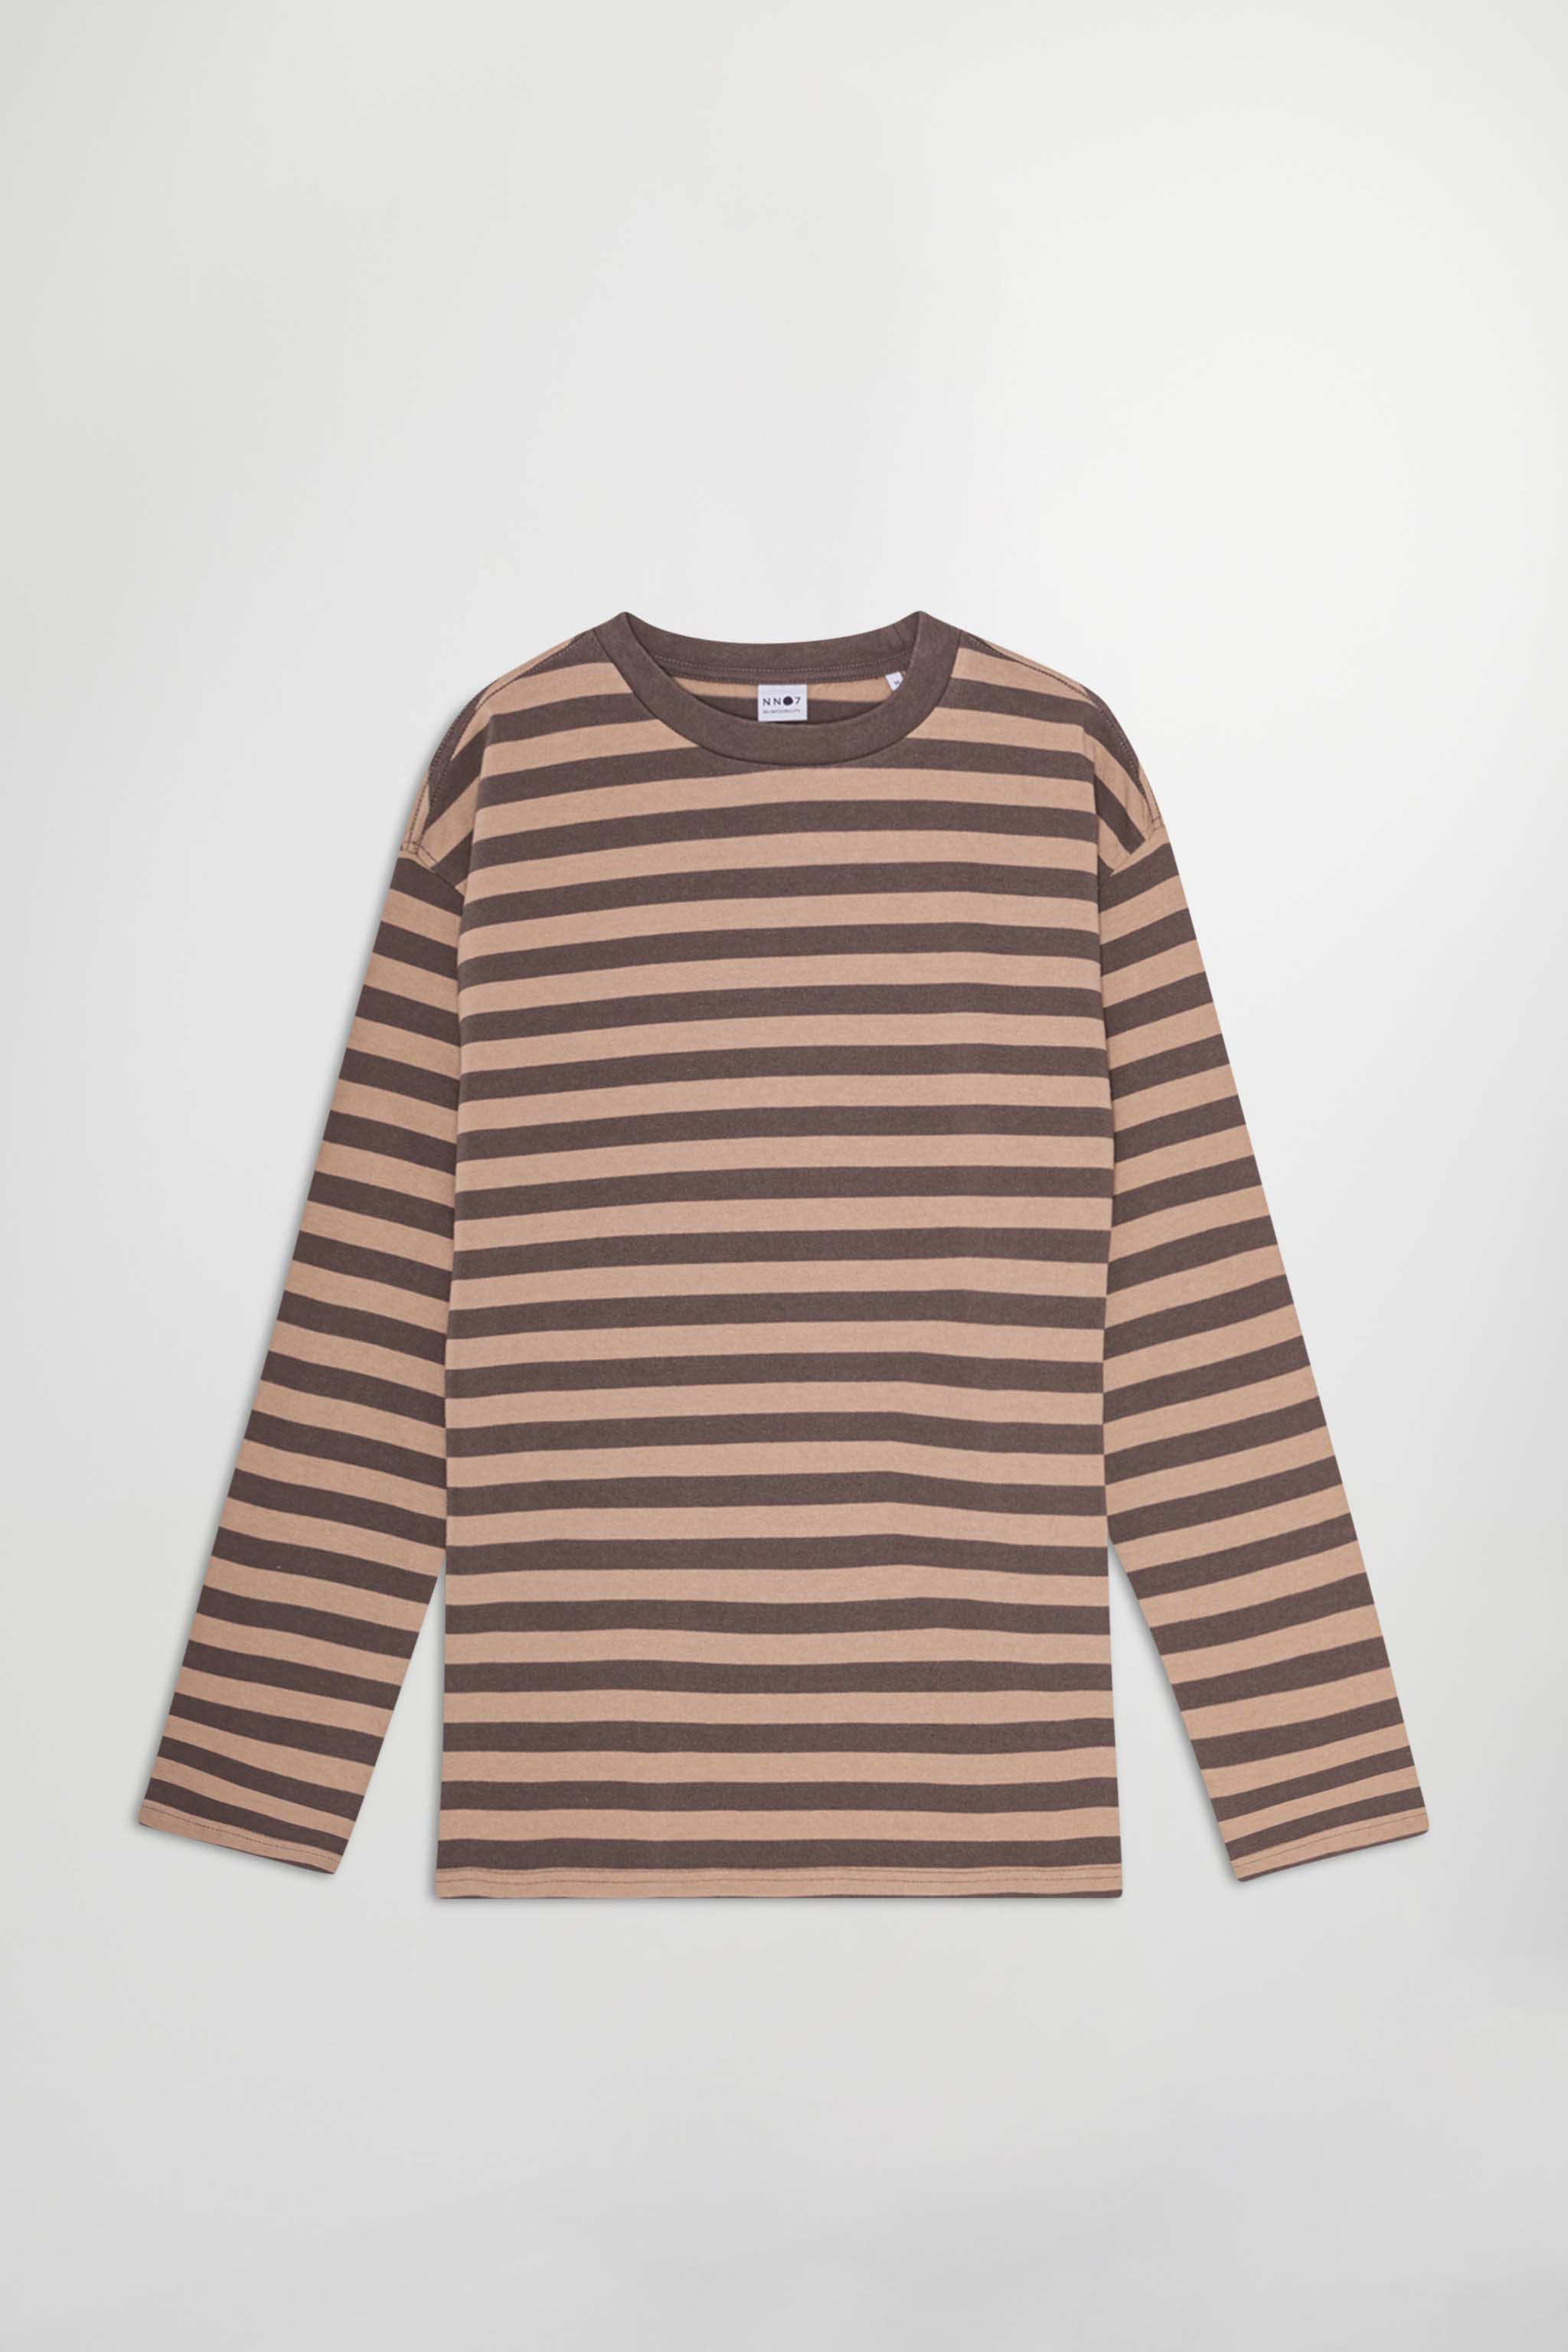 Tim 3449 men's sweatshirt - Blue Stripe - Buy online at NN.07®